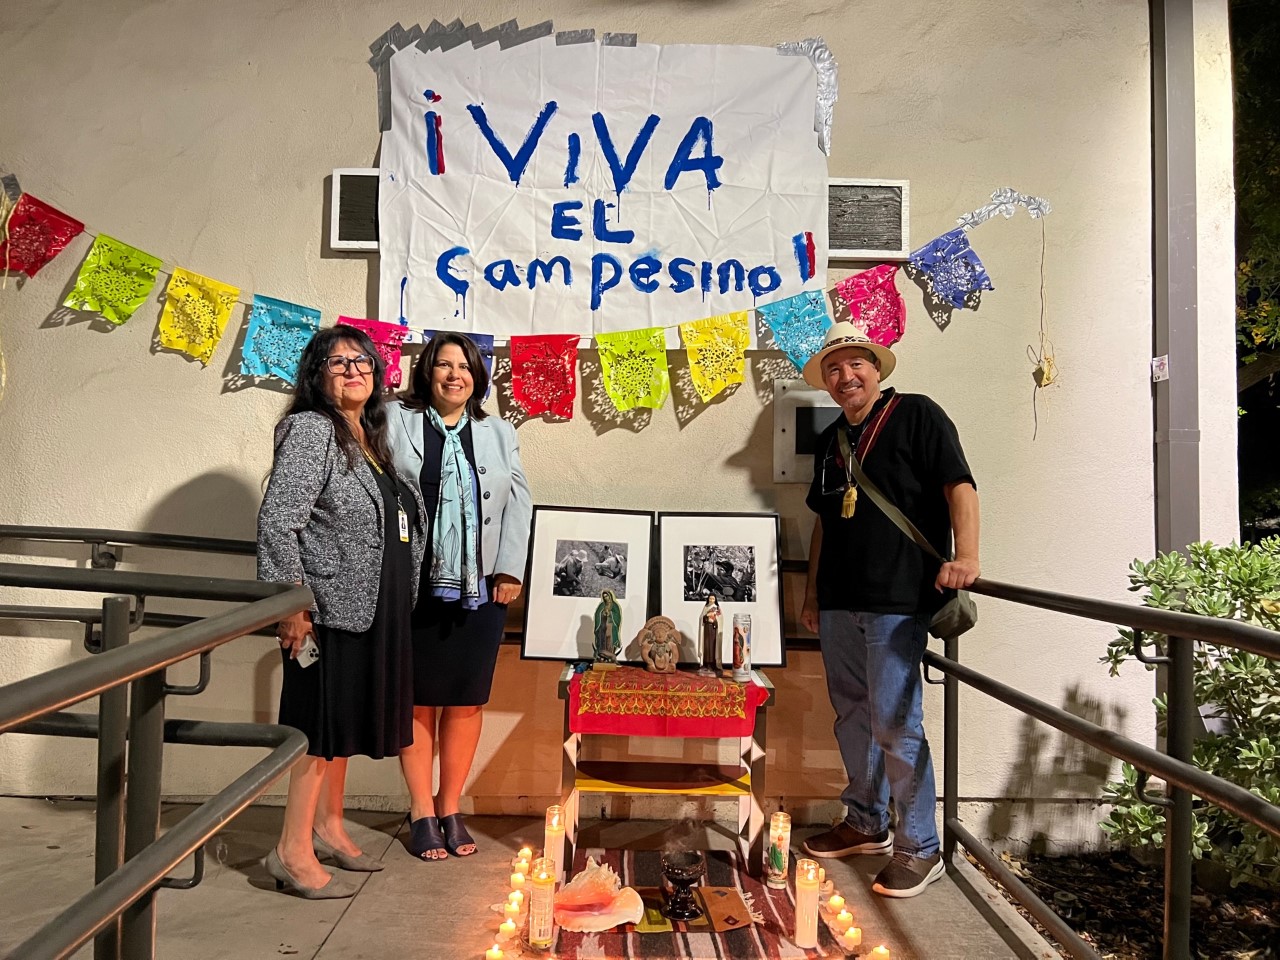 Vice President Dr. Lonita Cordova, Superintendent/President Dr. Lisa Aguilera Lawrenson, and Professor Mario Moreno celebrate the newly renamed Campesino Forum